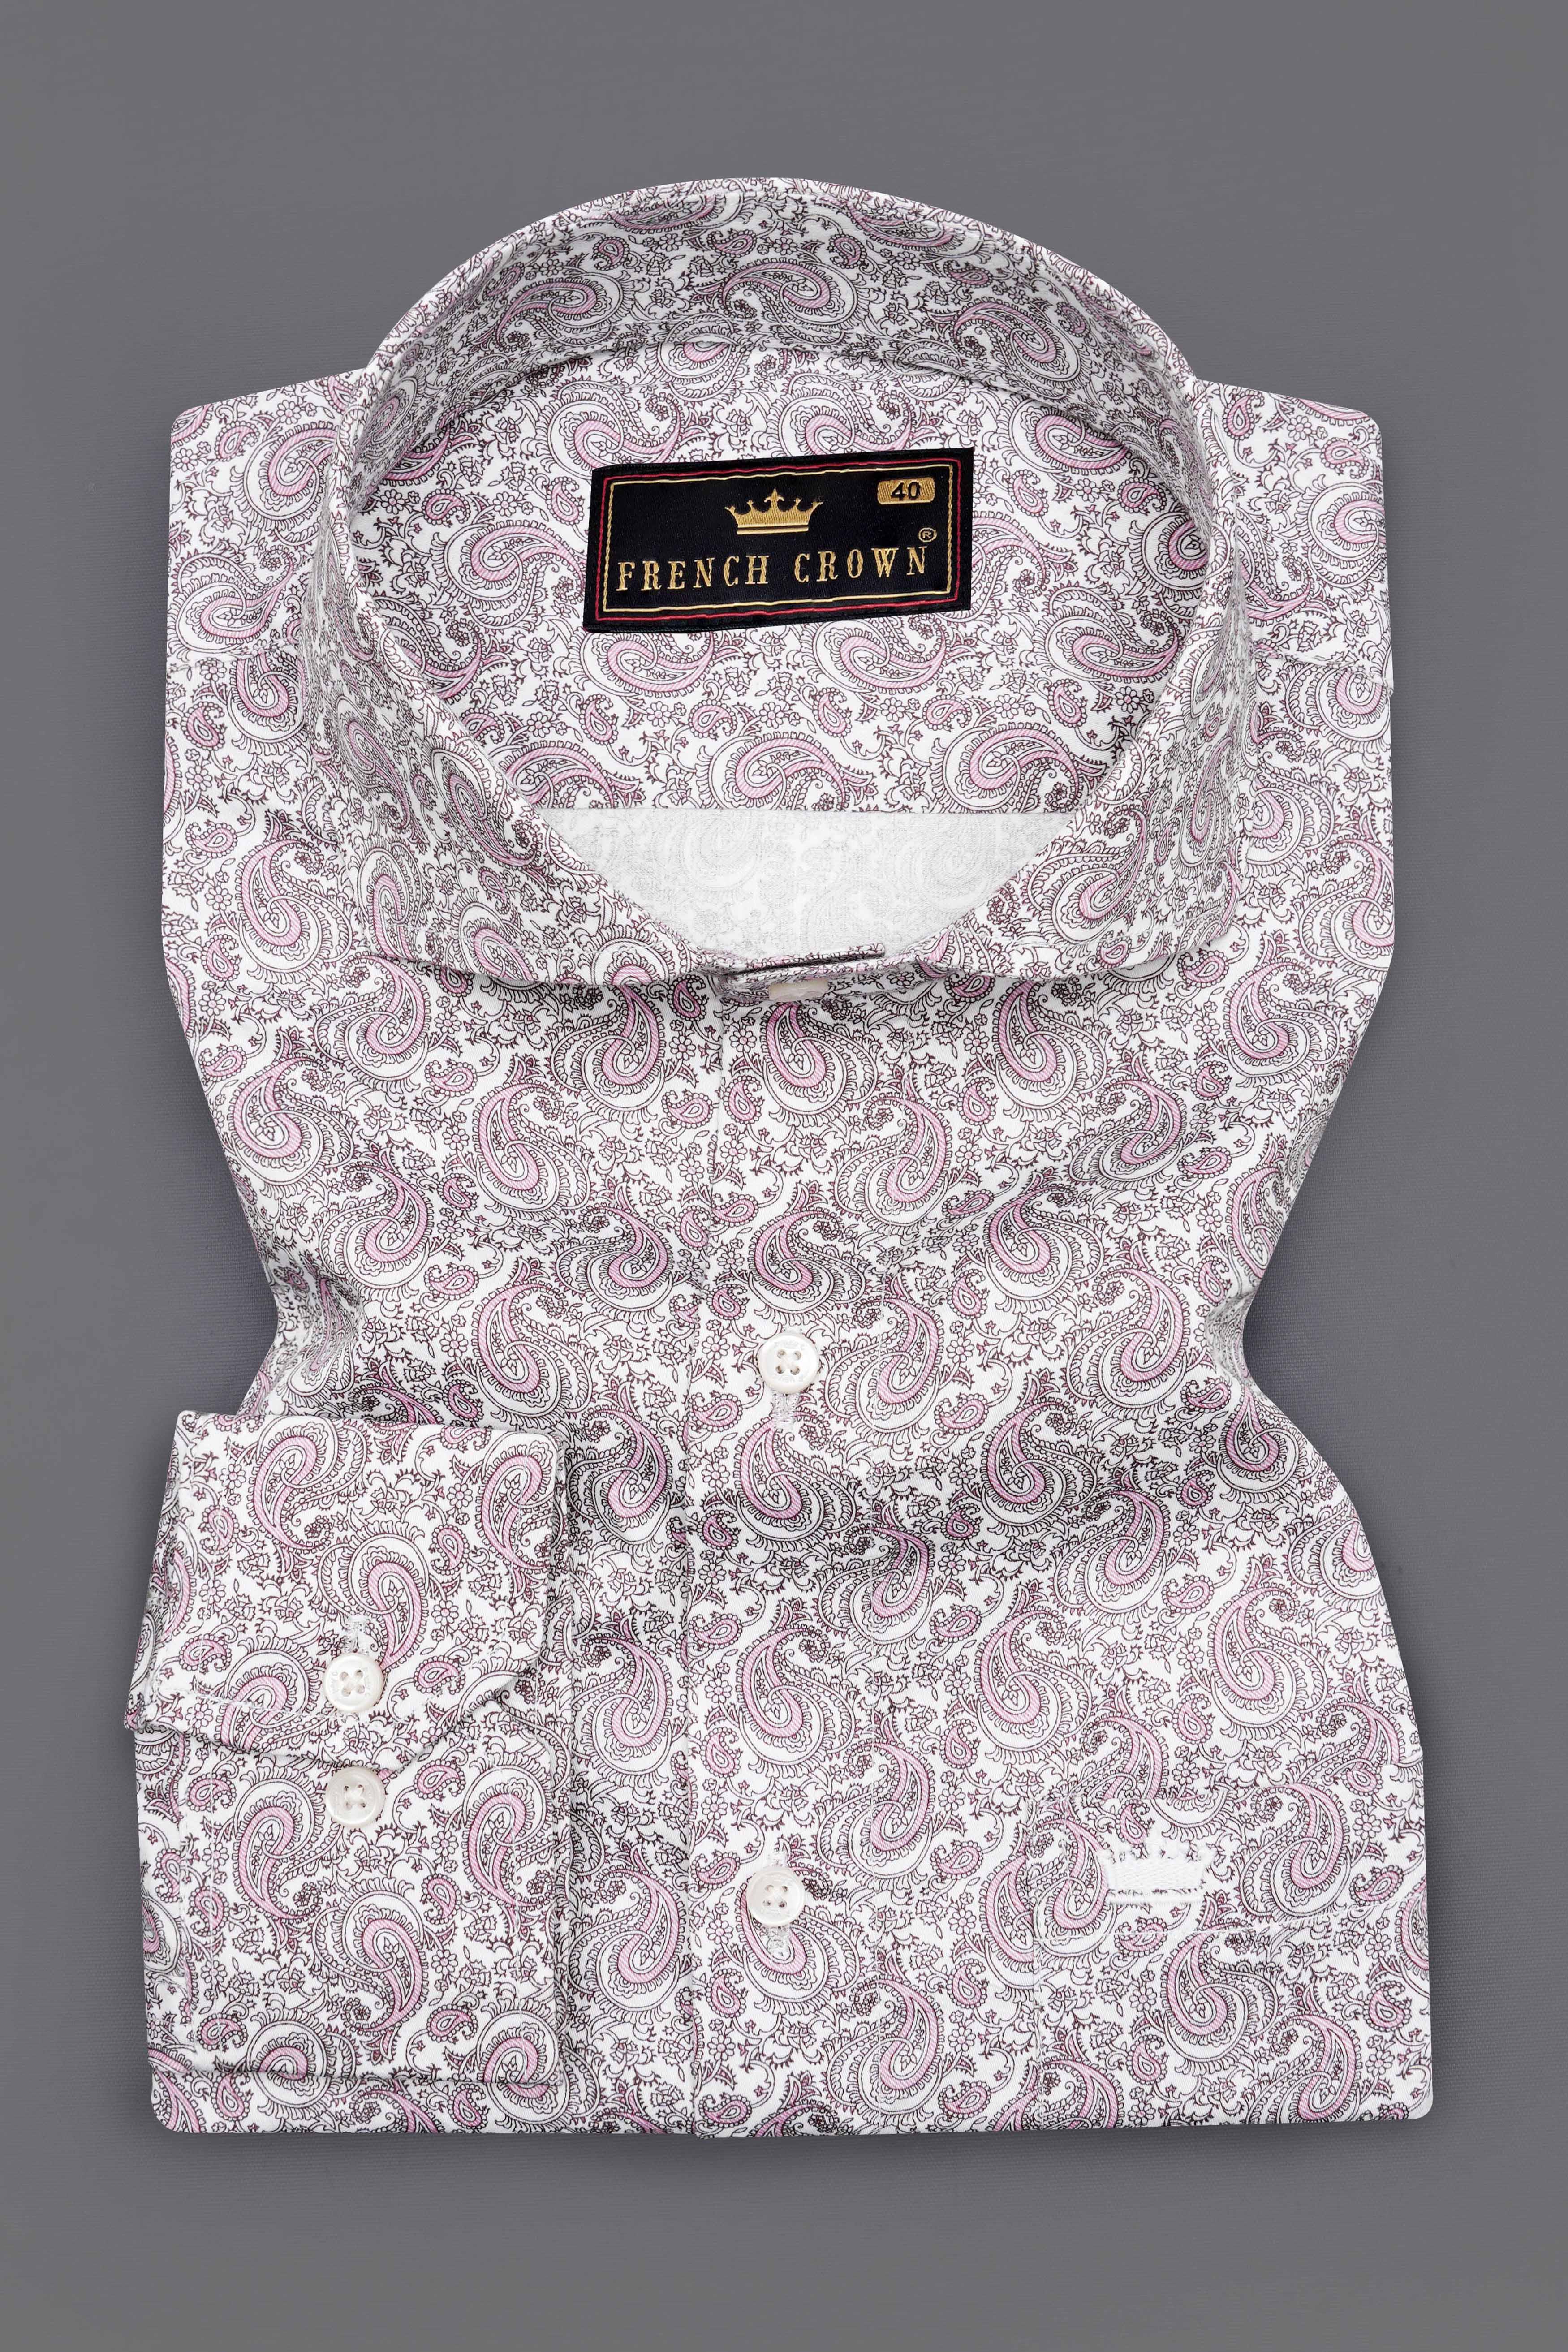 Bright White with Viola Pink Paisley Printed Super Soft Premium Cotton Shirt